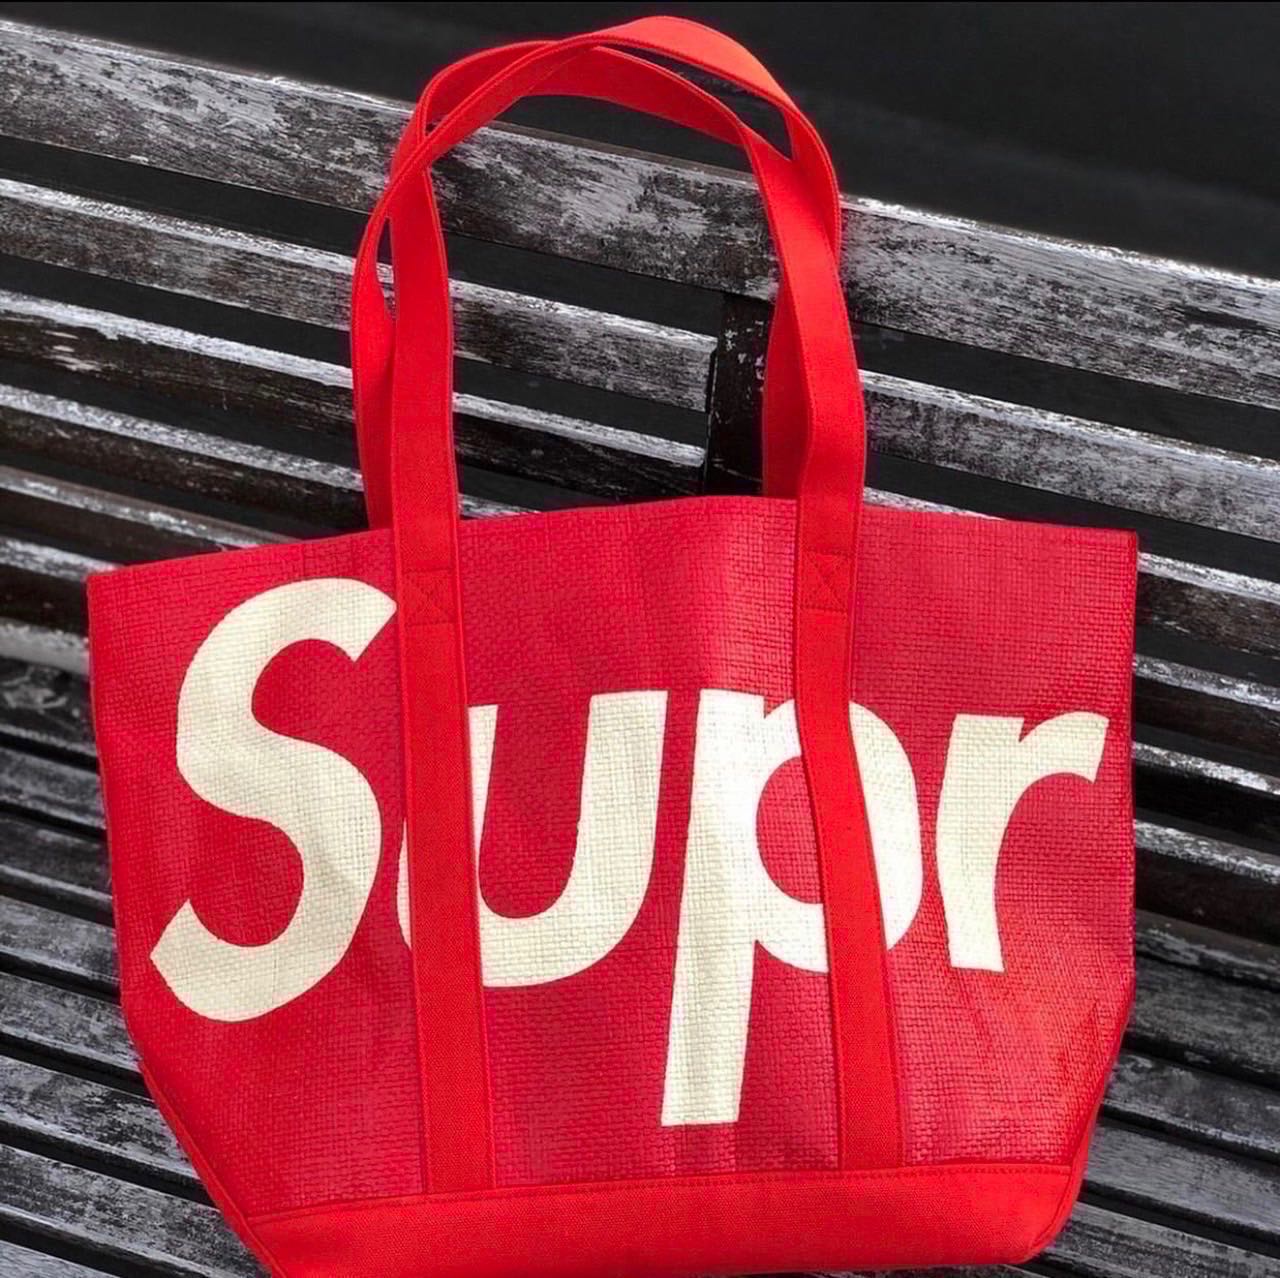 Supreme Red Tote Bag